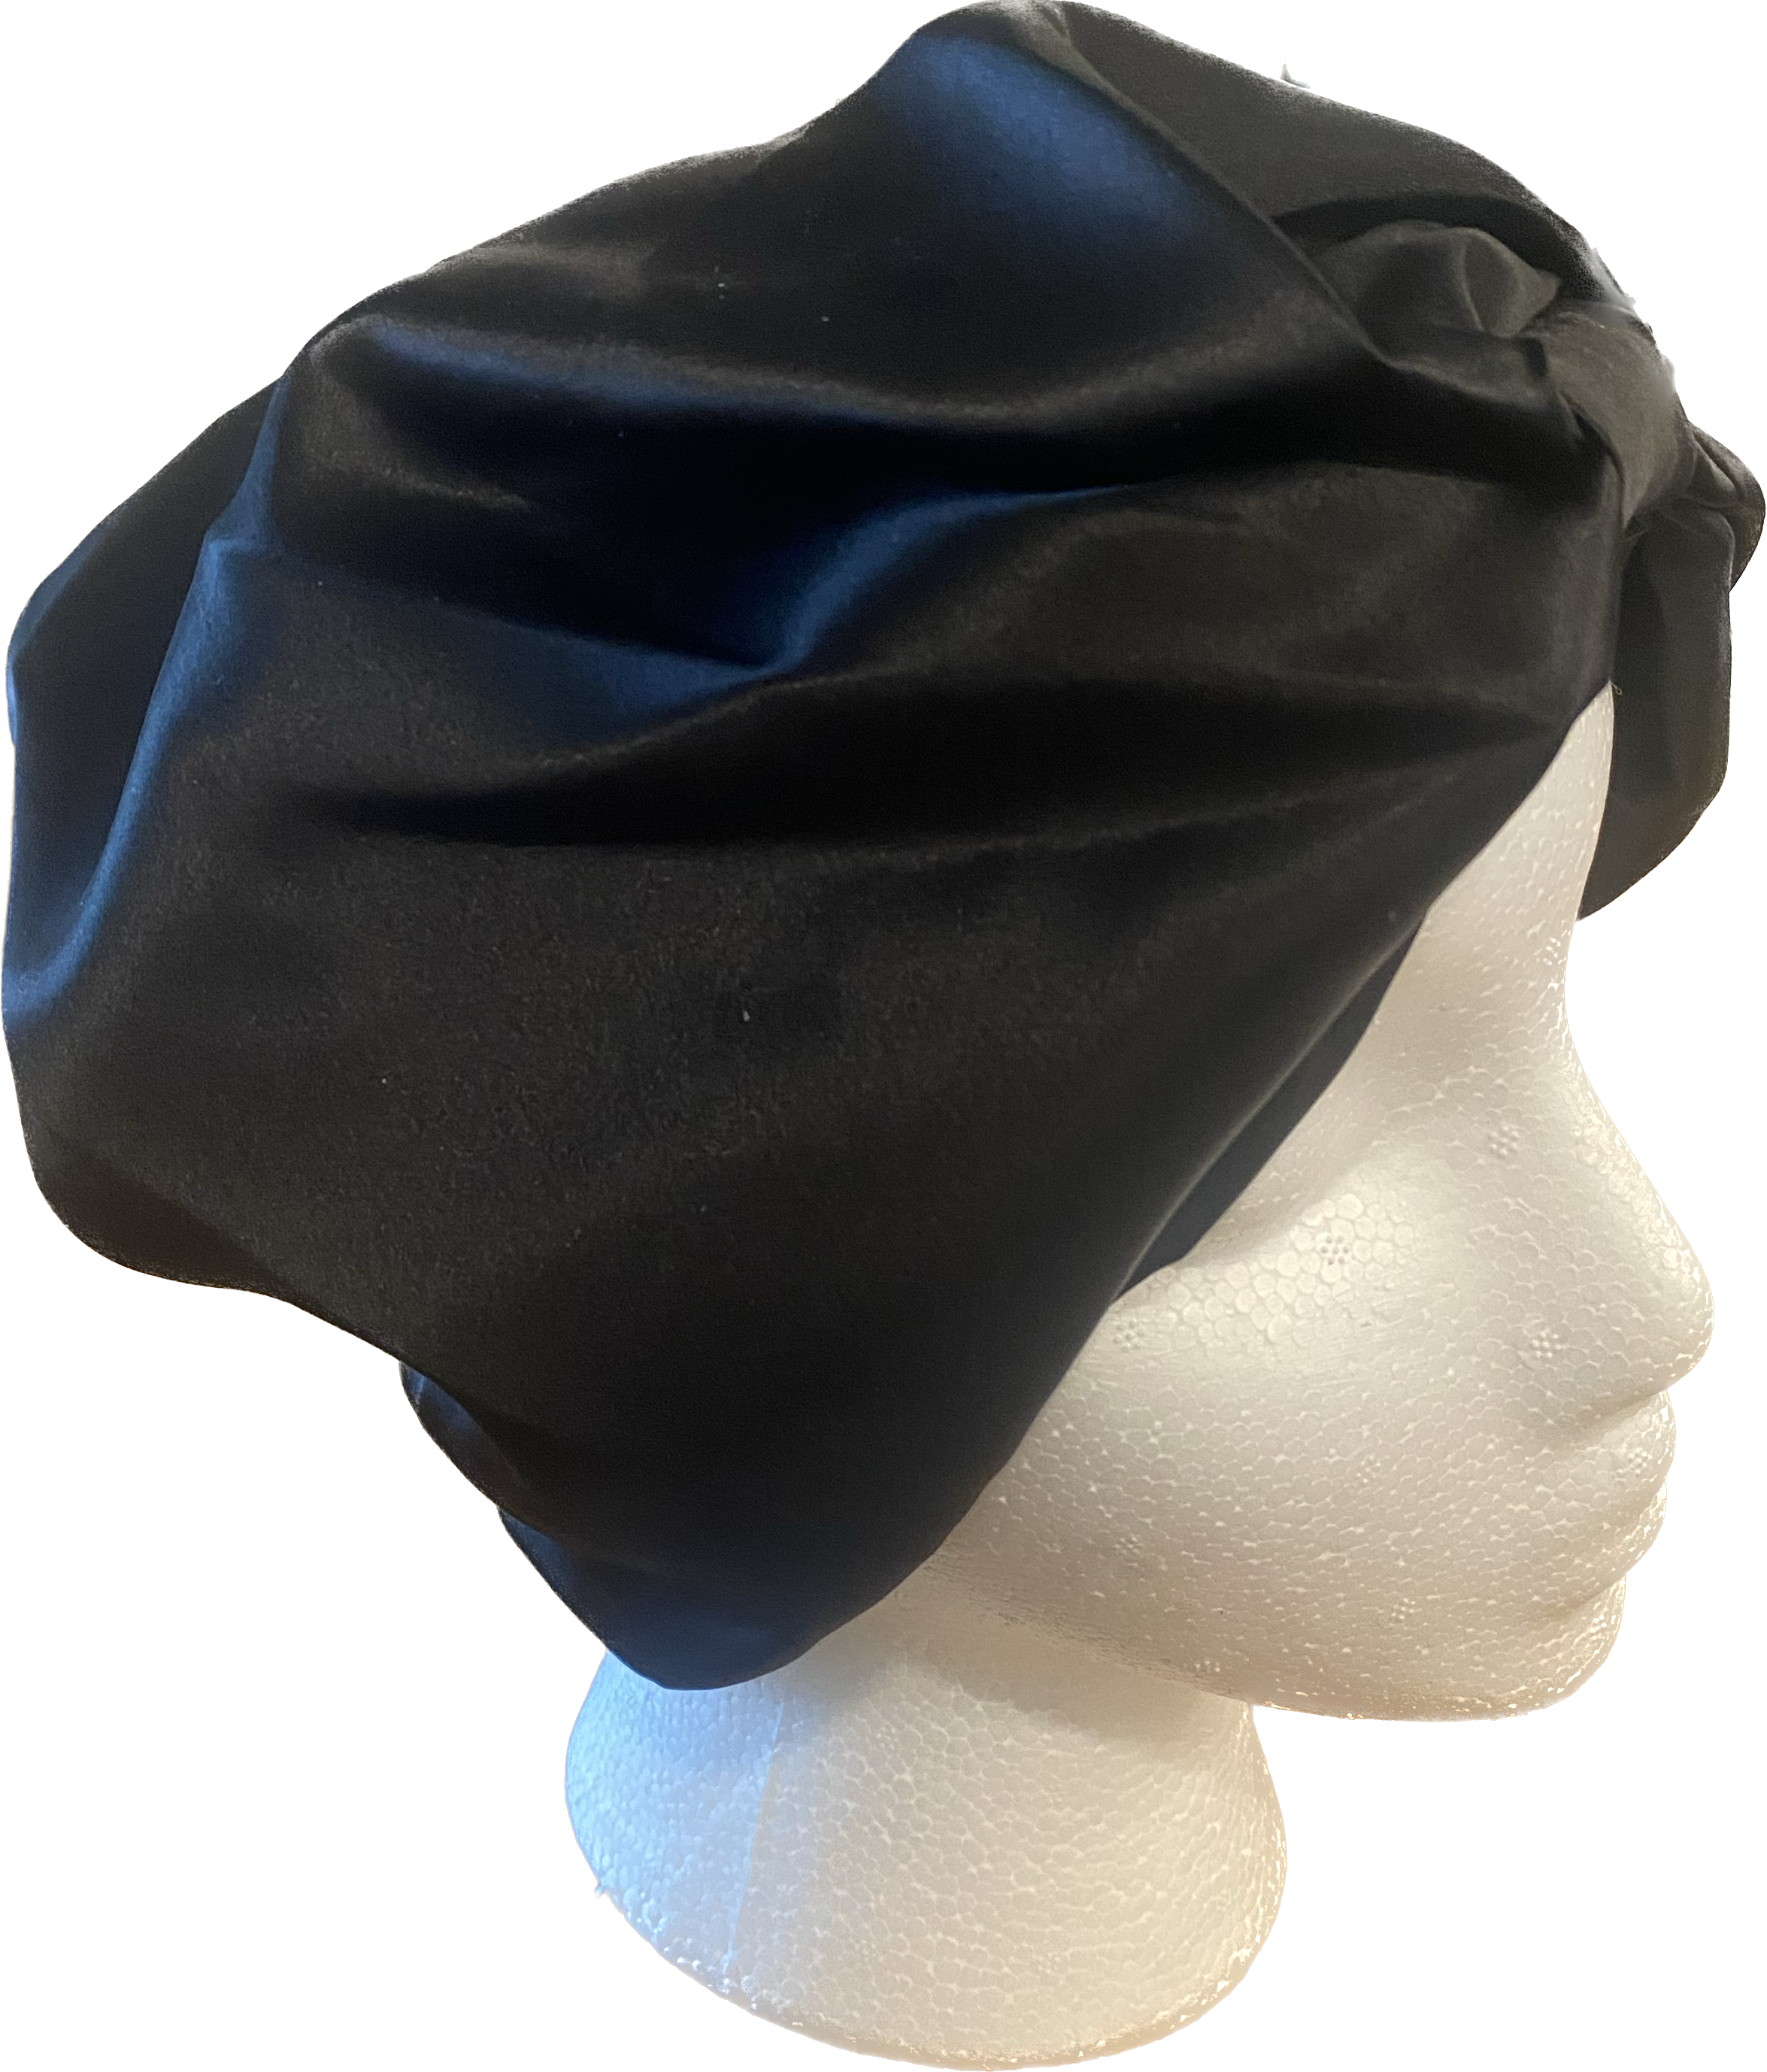  Black Square Silk Night Cap/Bonnet - Black Square Silk Night Cap/Bonnet -  -  - Luxurious Fine Silk by Forsters Finery